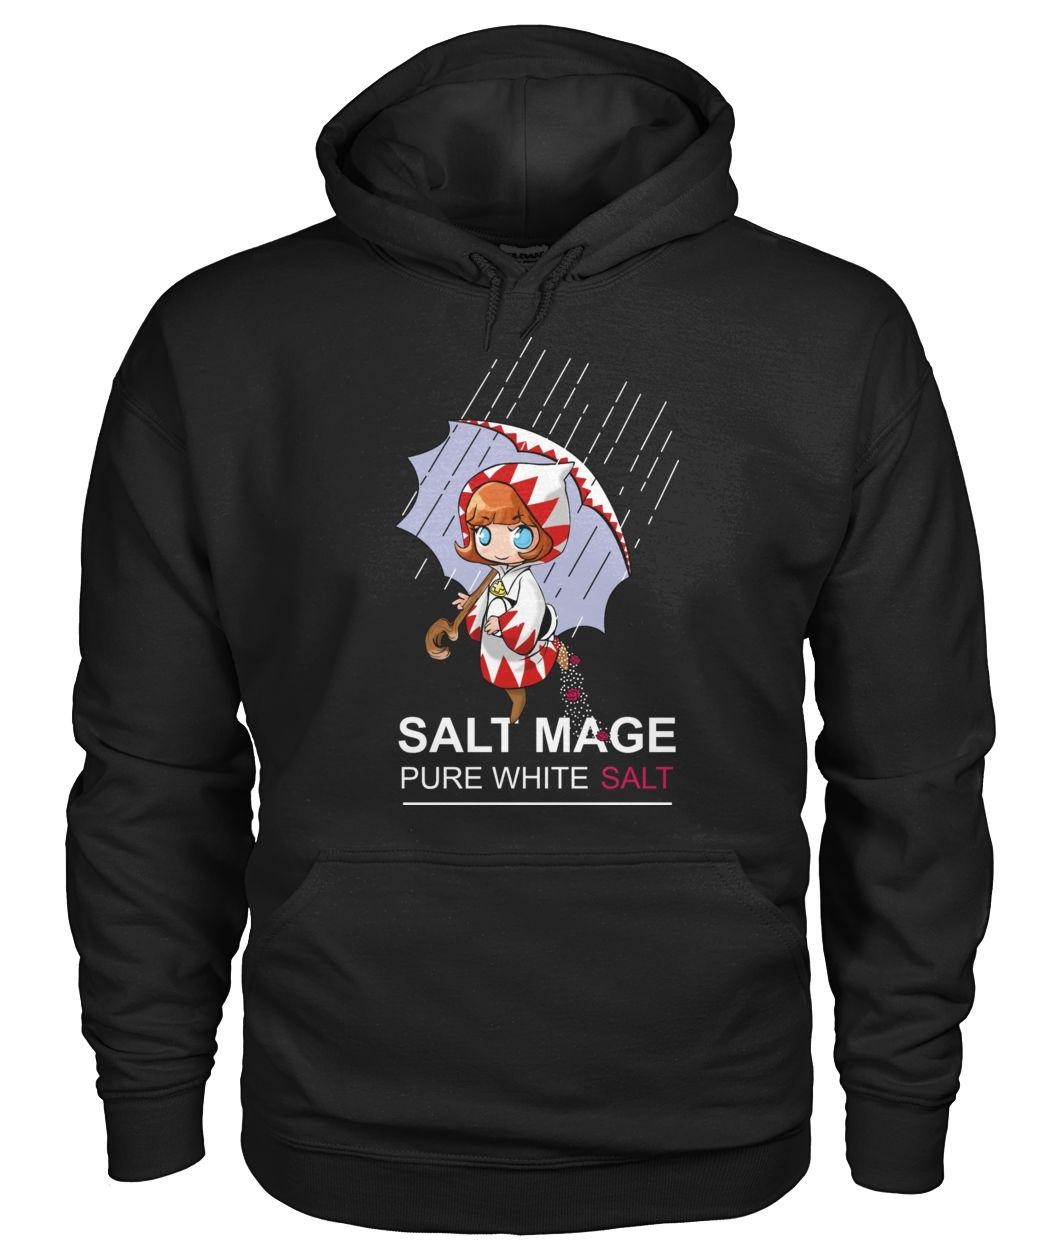 Salt mage pure white salt shirt and hoodie